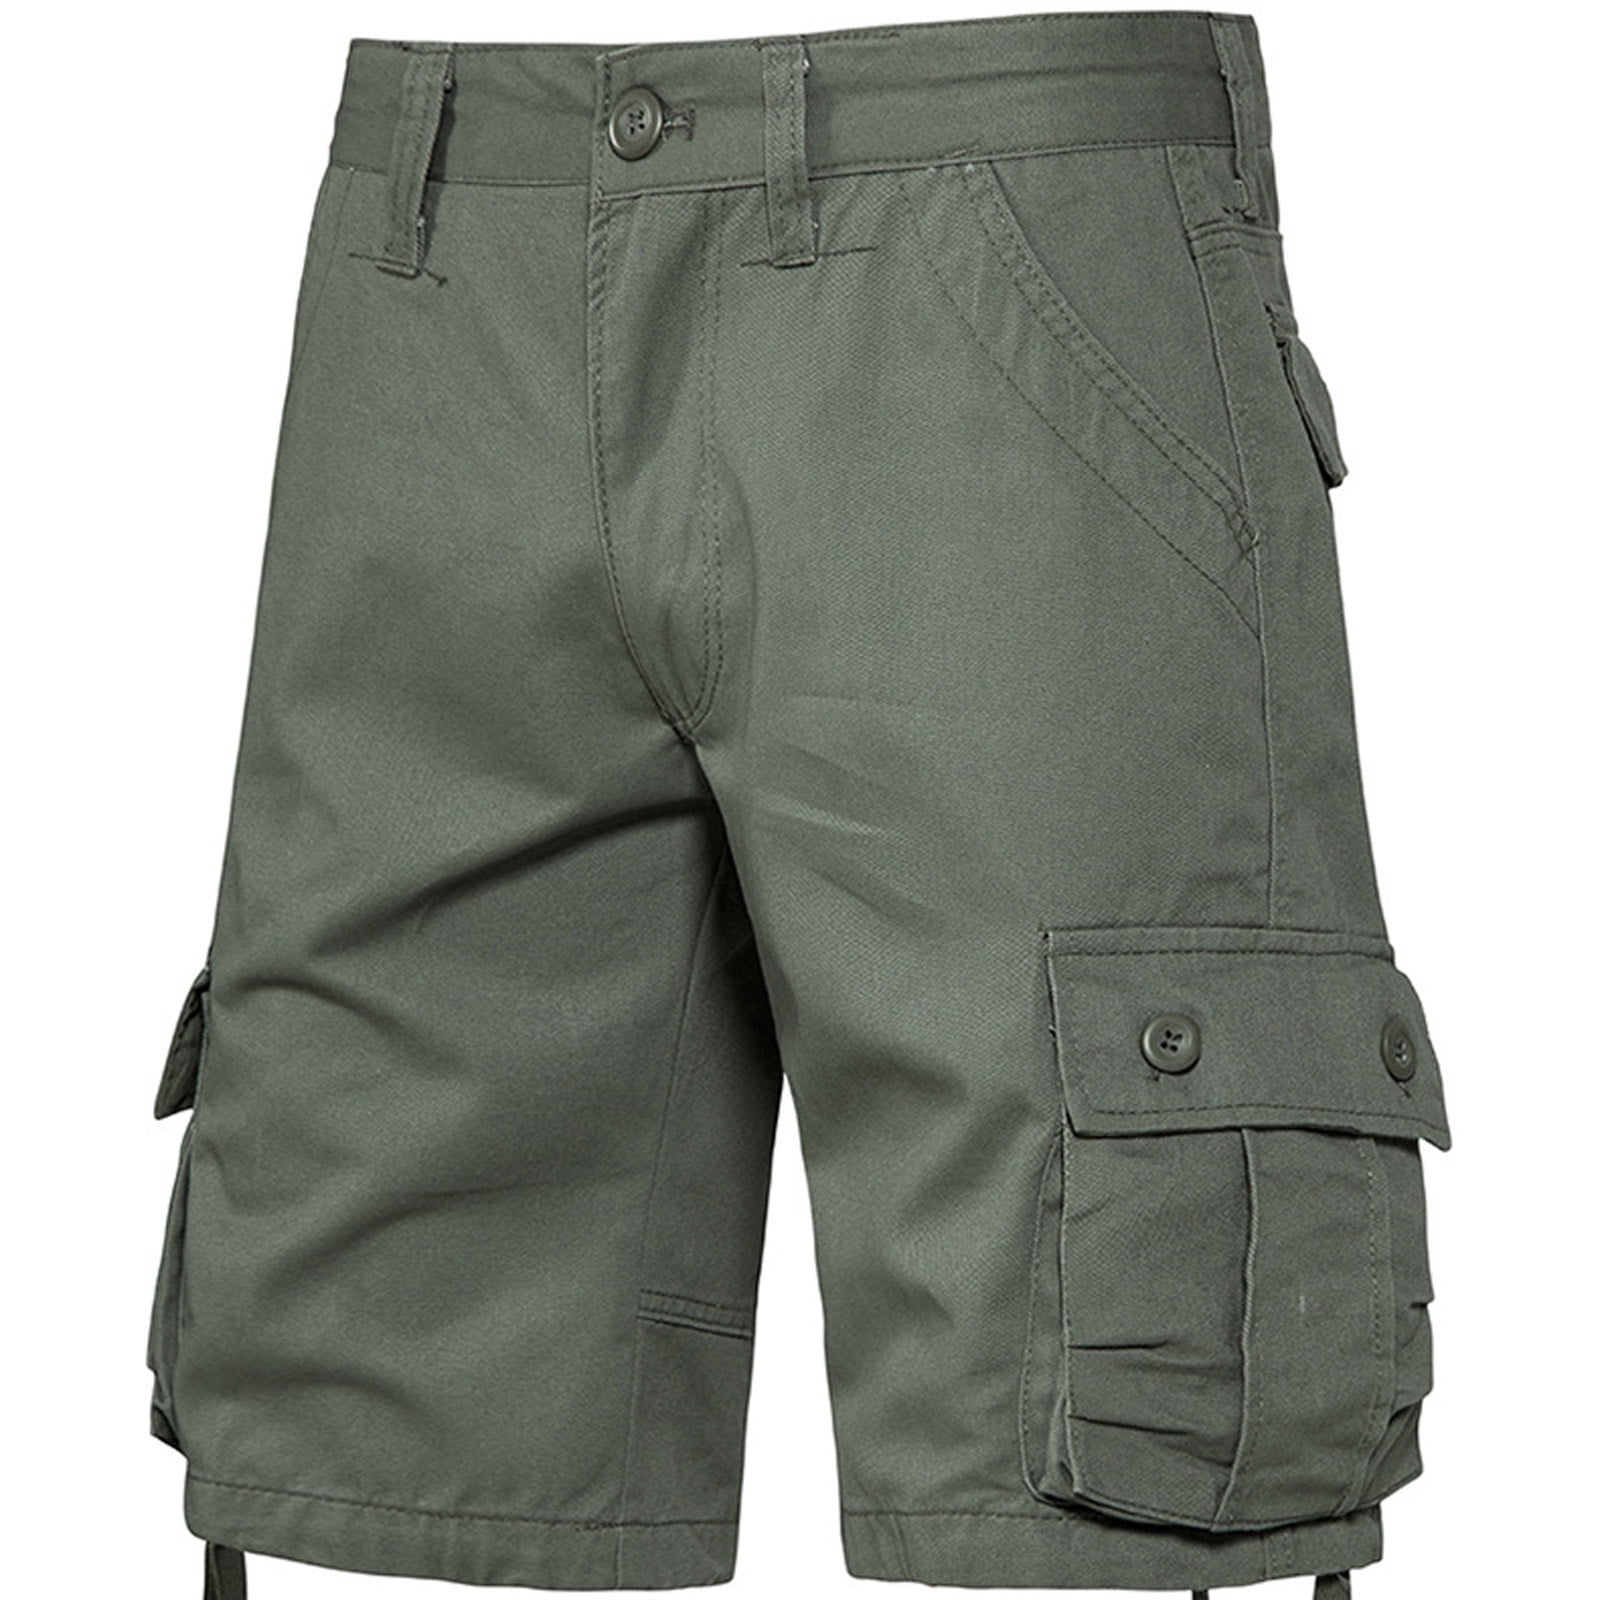 jsaierl Mens Cargo Shorts Plus Size Multi Pockets Shorts Work Military ...